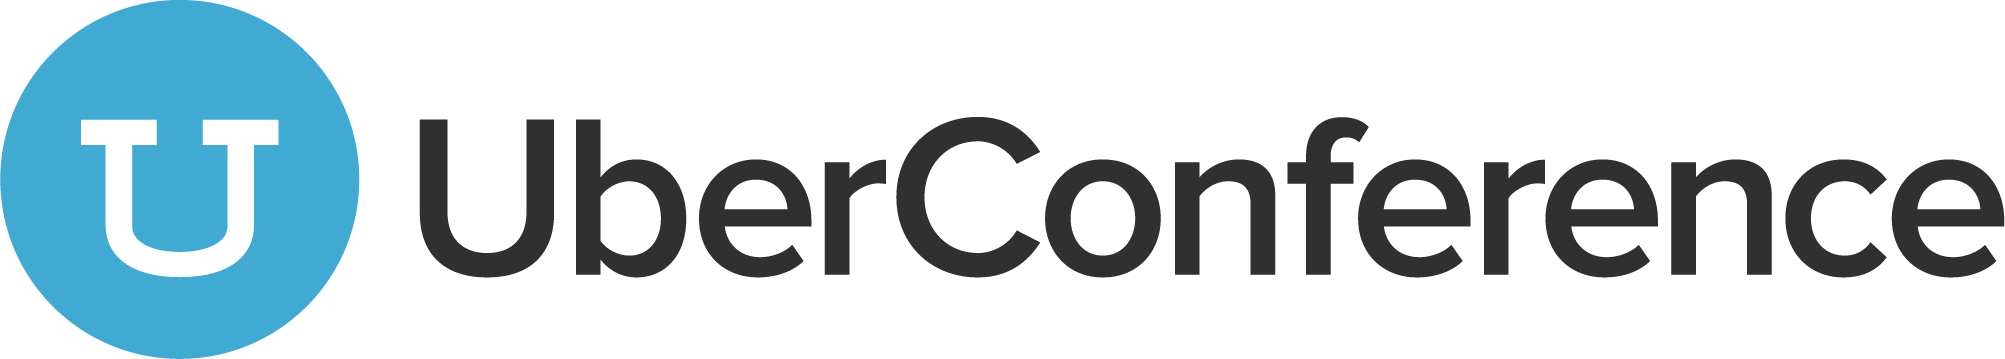 UberConference_Logo